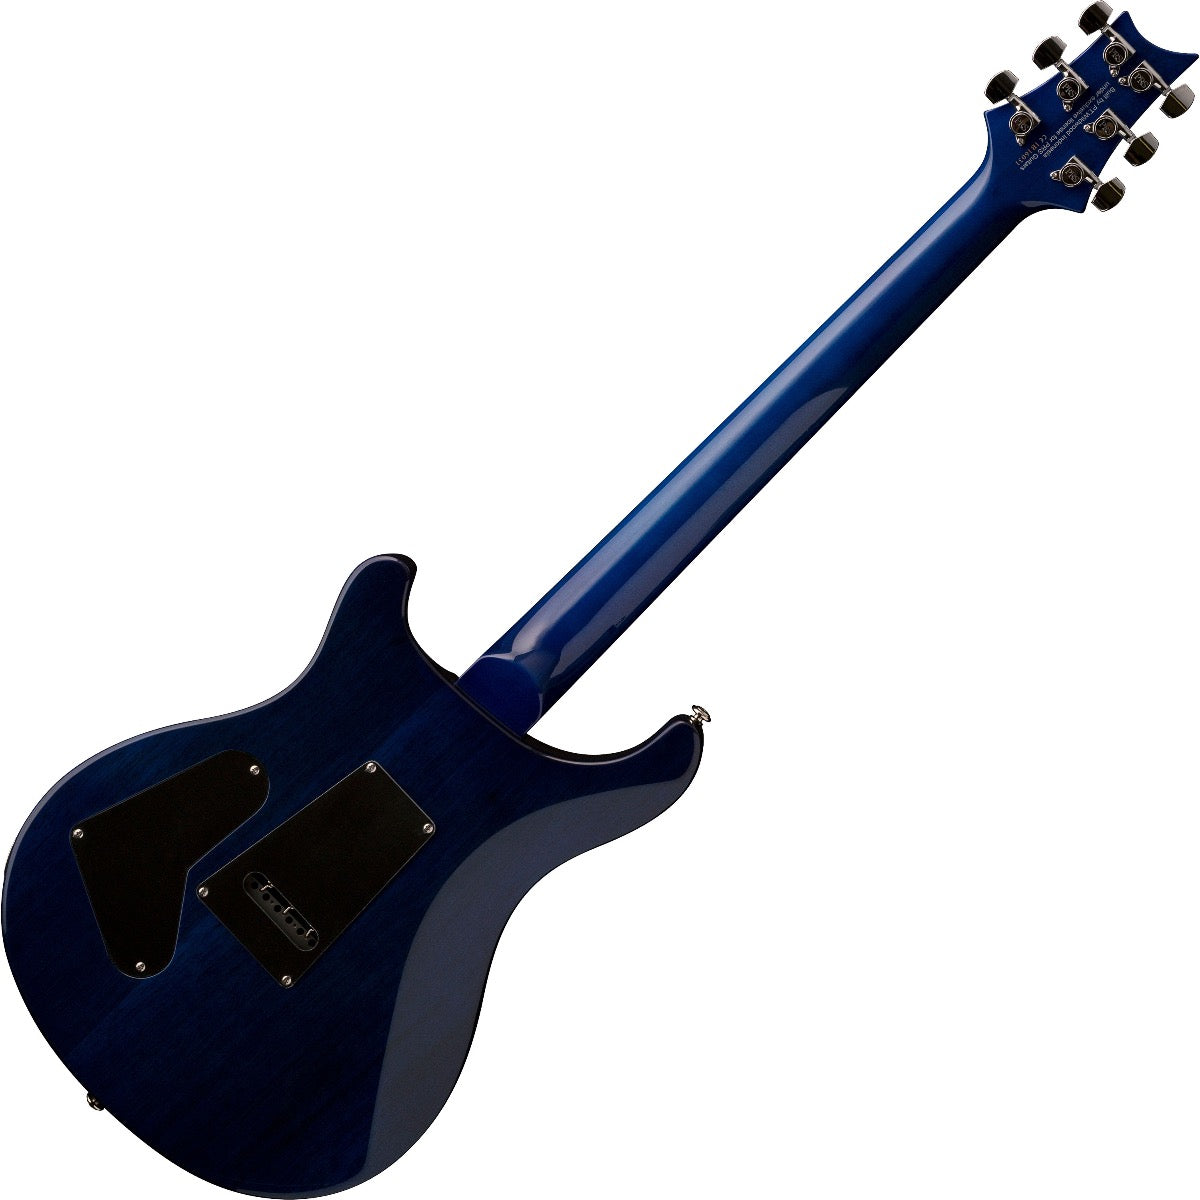 Back view of PRS SE Standard 24 Electric Guitar - Translucent Blue